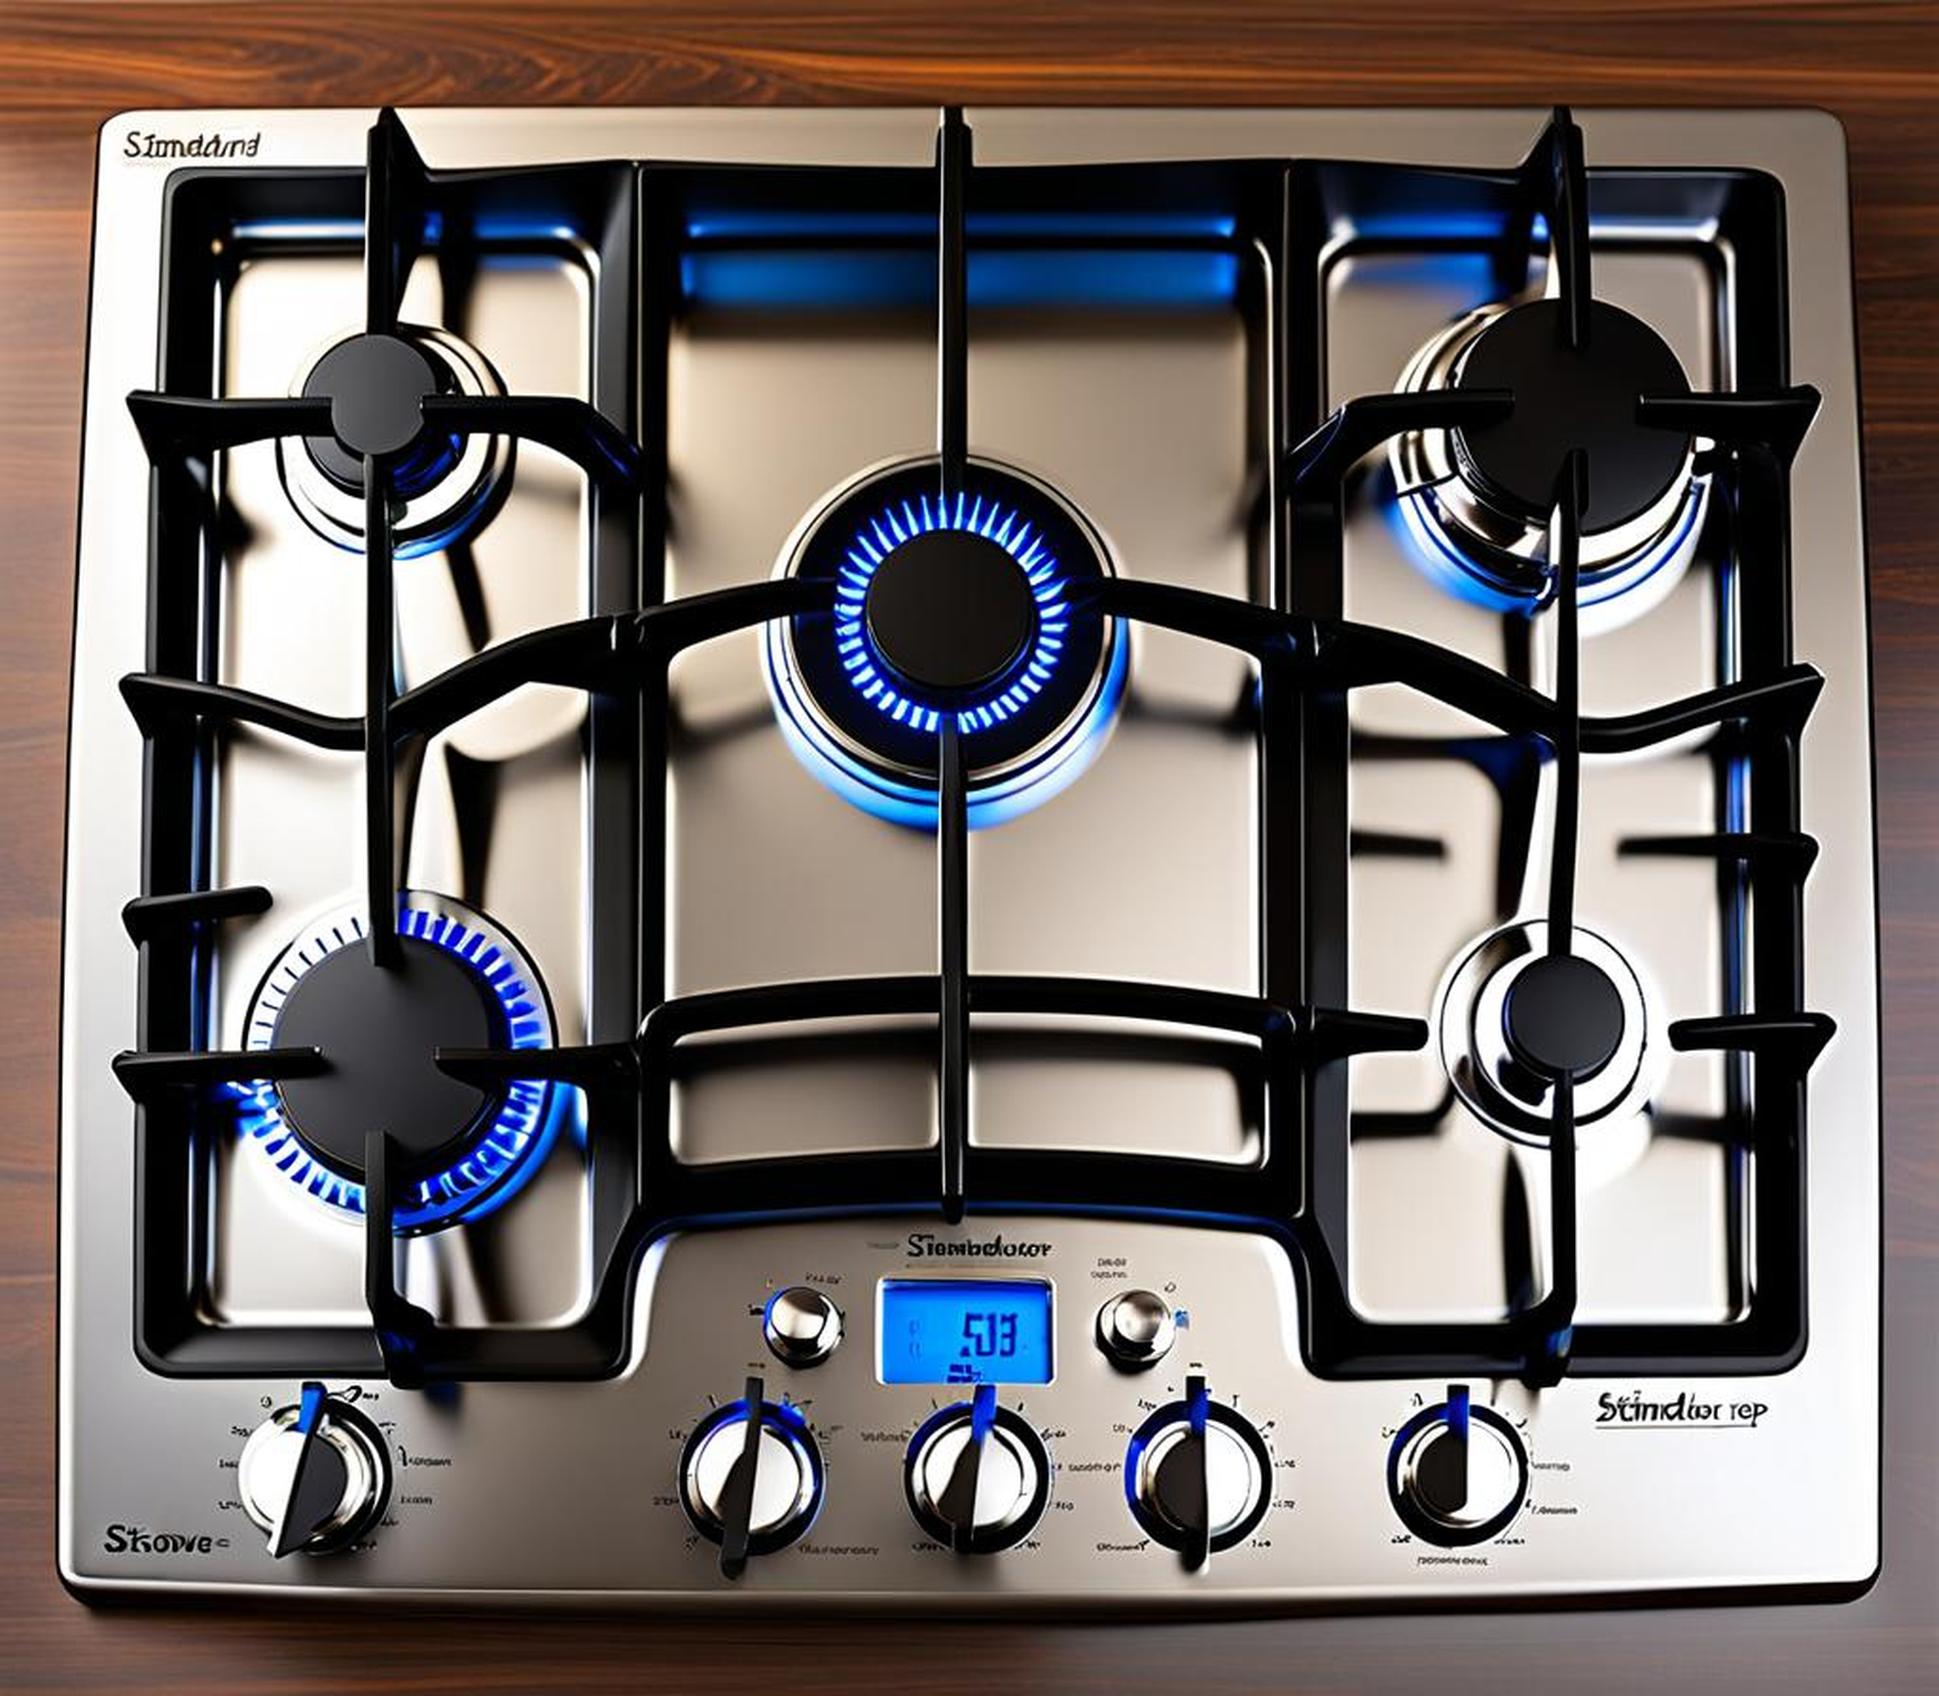 standard stove top dimensions